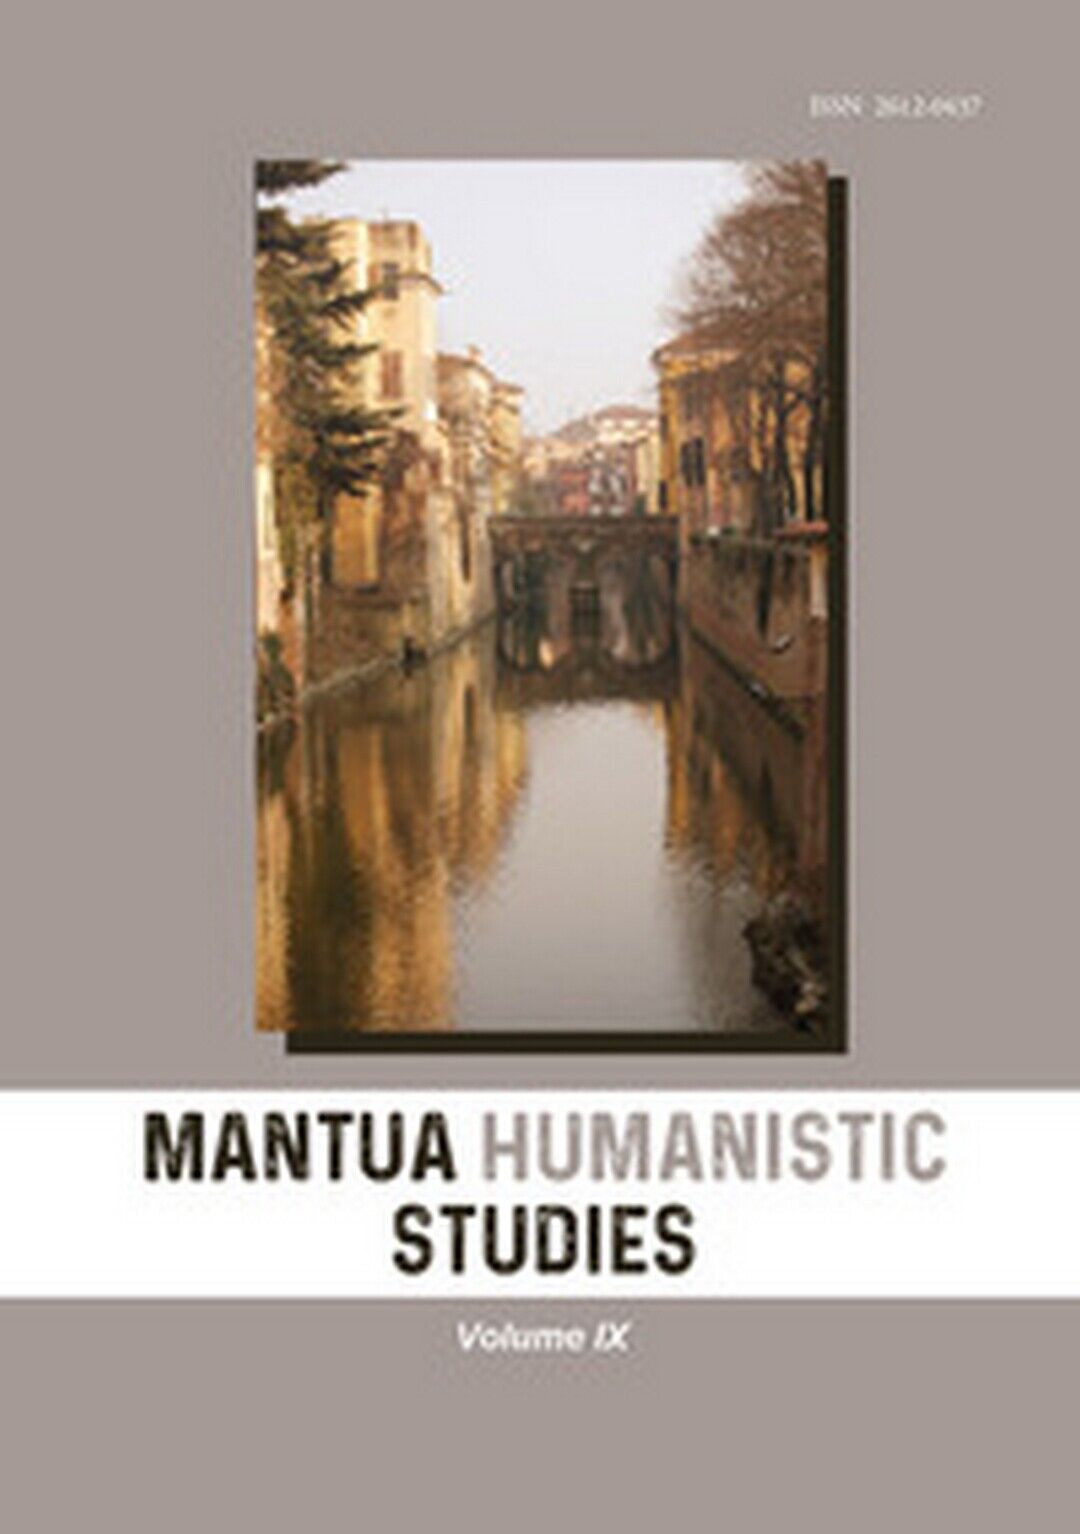 Mantua humanistic studies Vol.9  di R. Santi,  2019,  Youcanprint libro usato